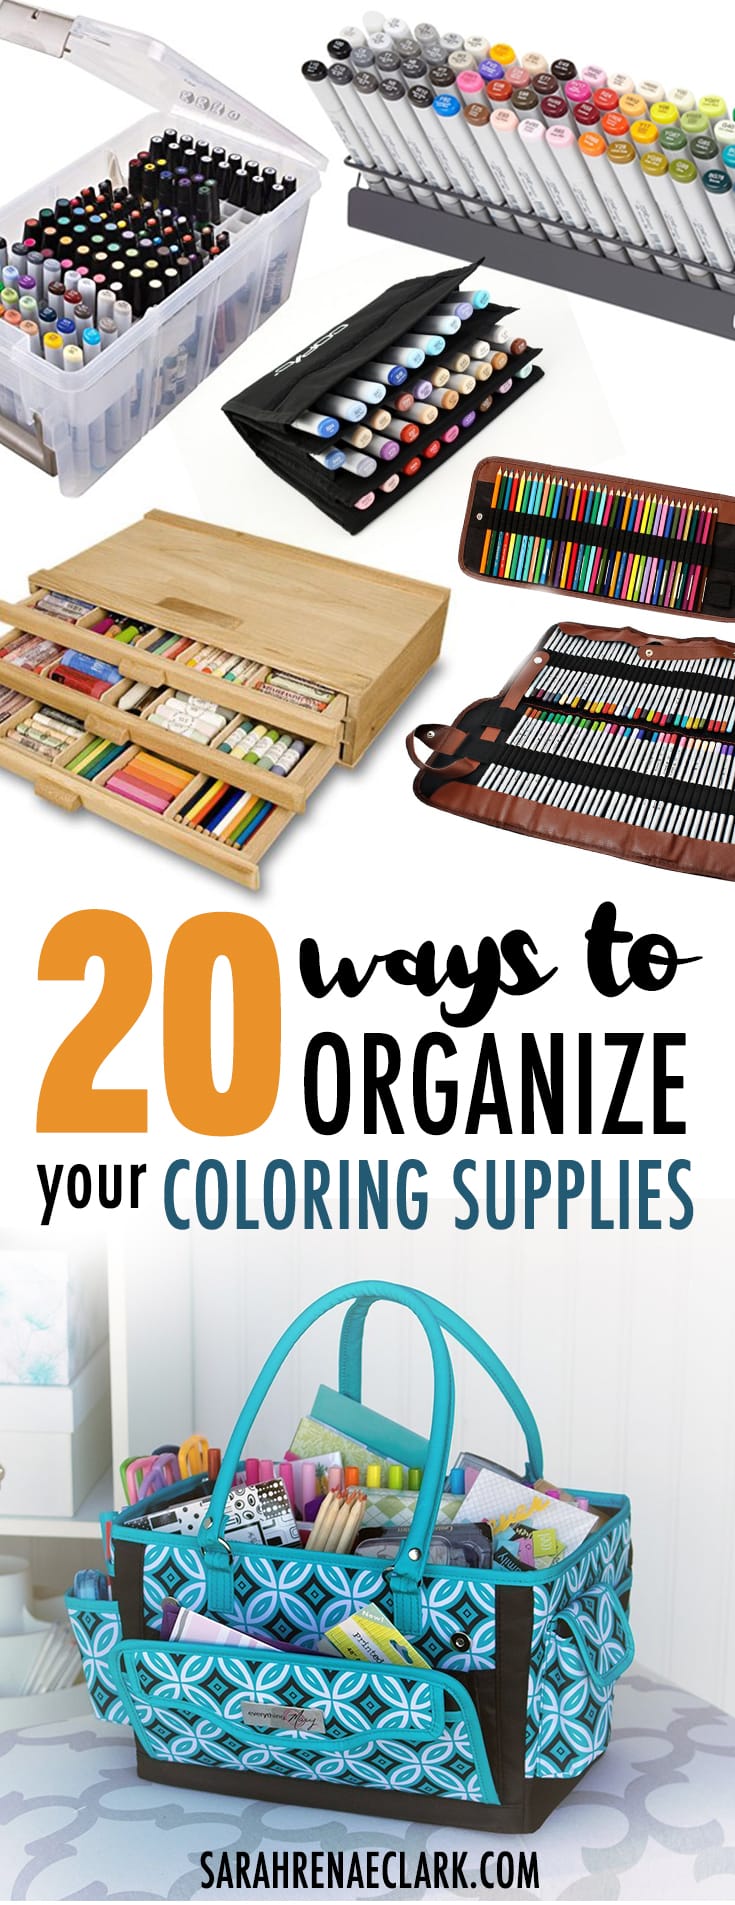 DIY Coloring Book Organizer! 